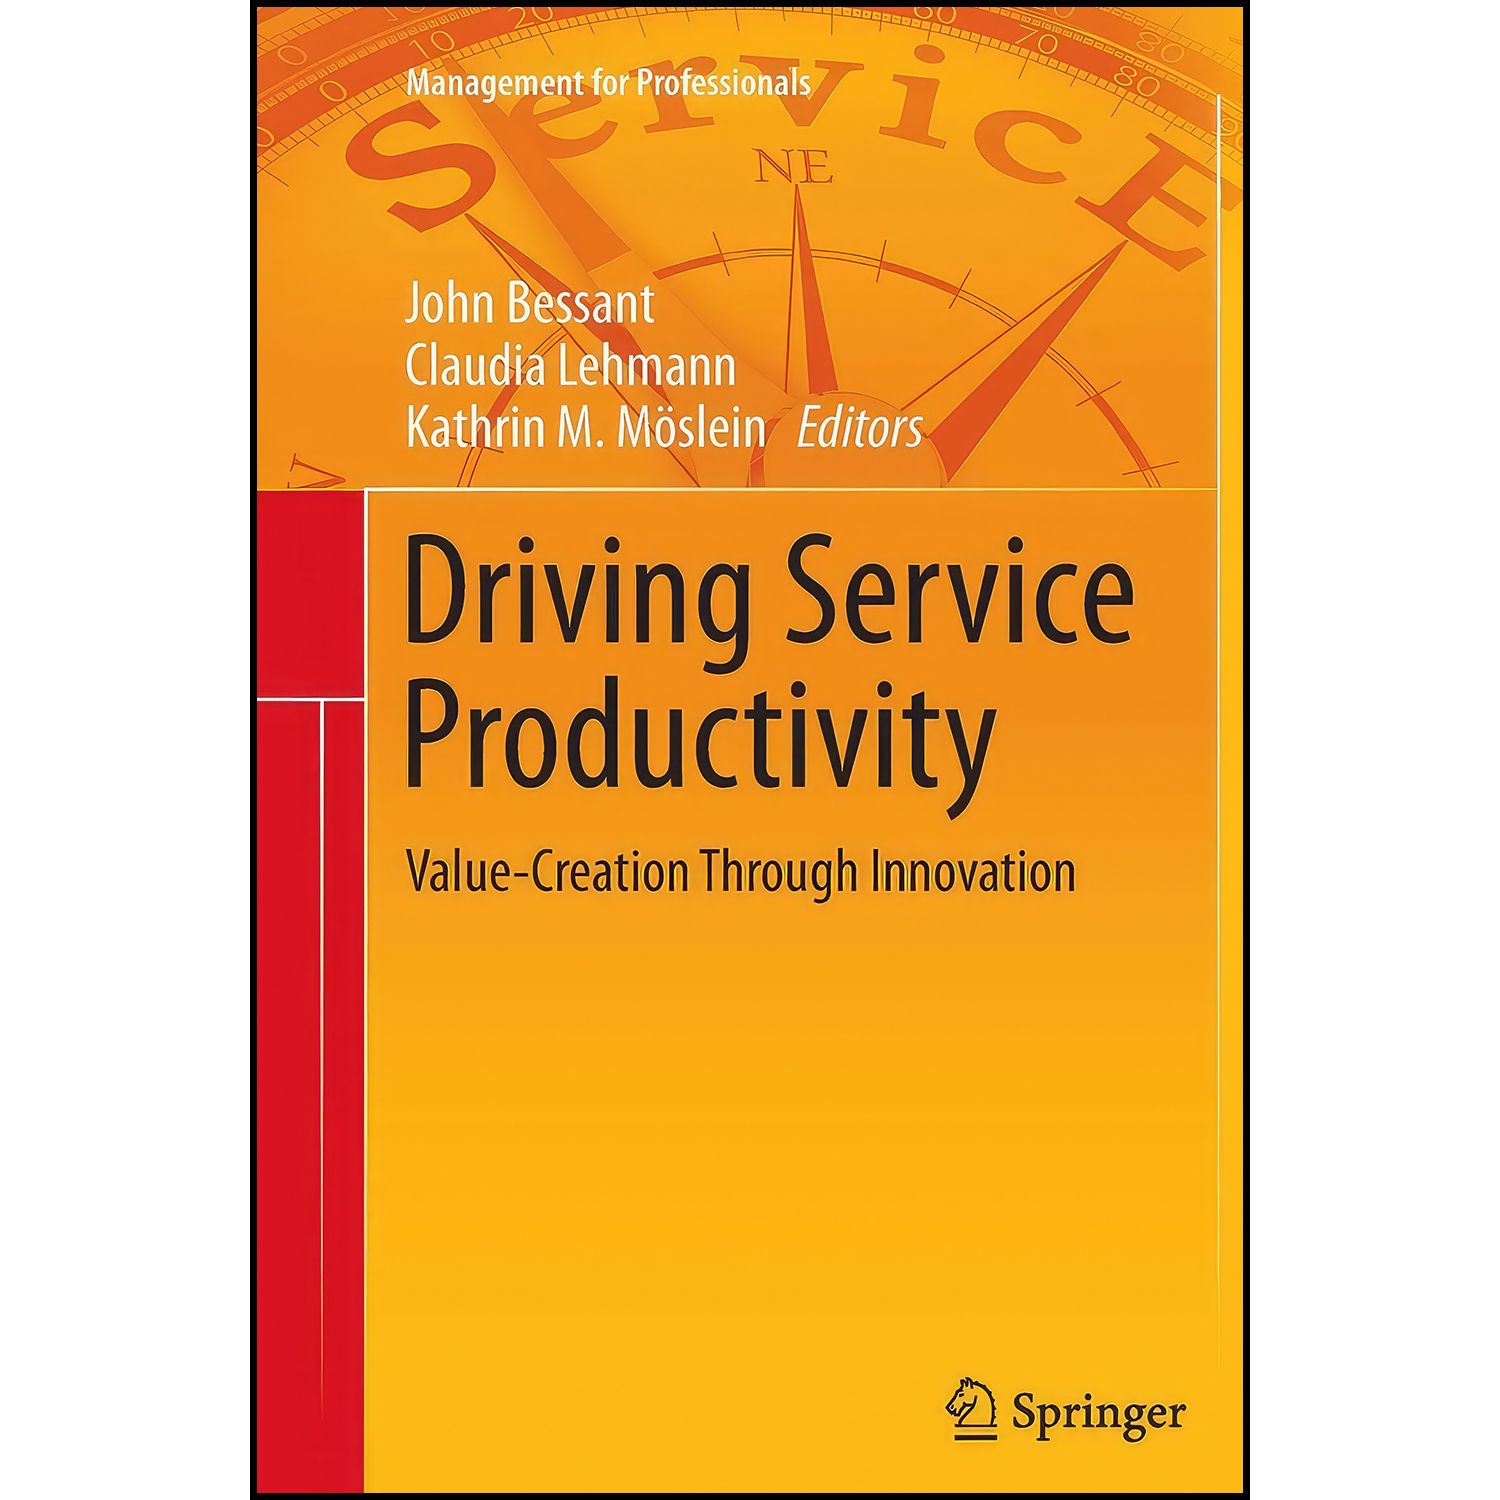 کتاب Driving Service Productivity اثر جمعي از نويسندگان انتشارات Springer